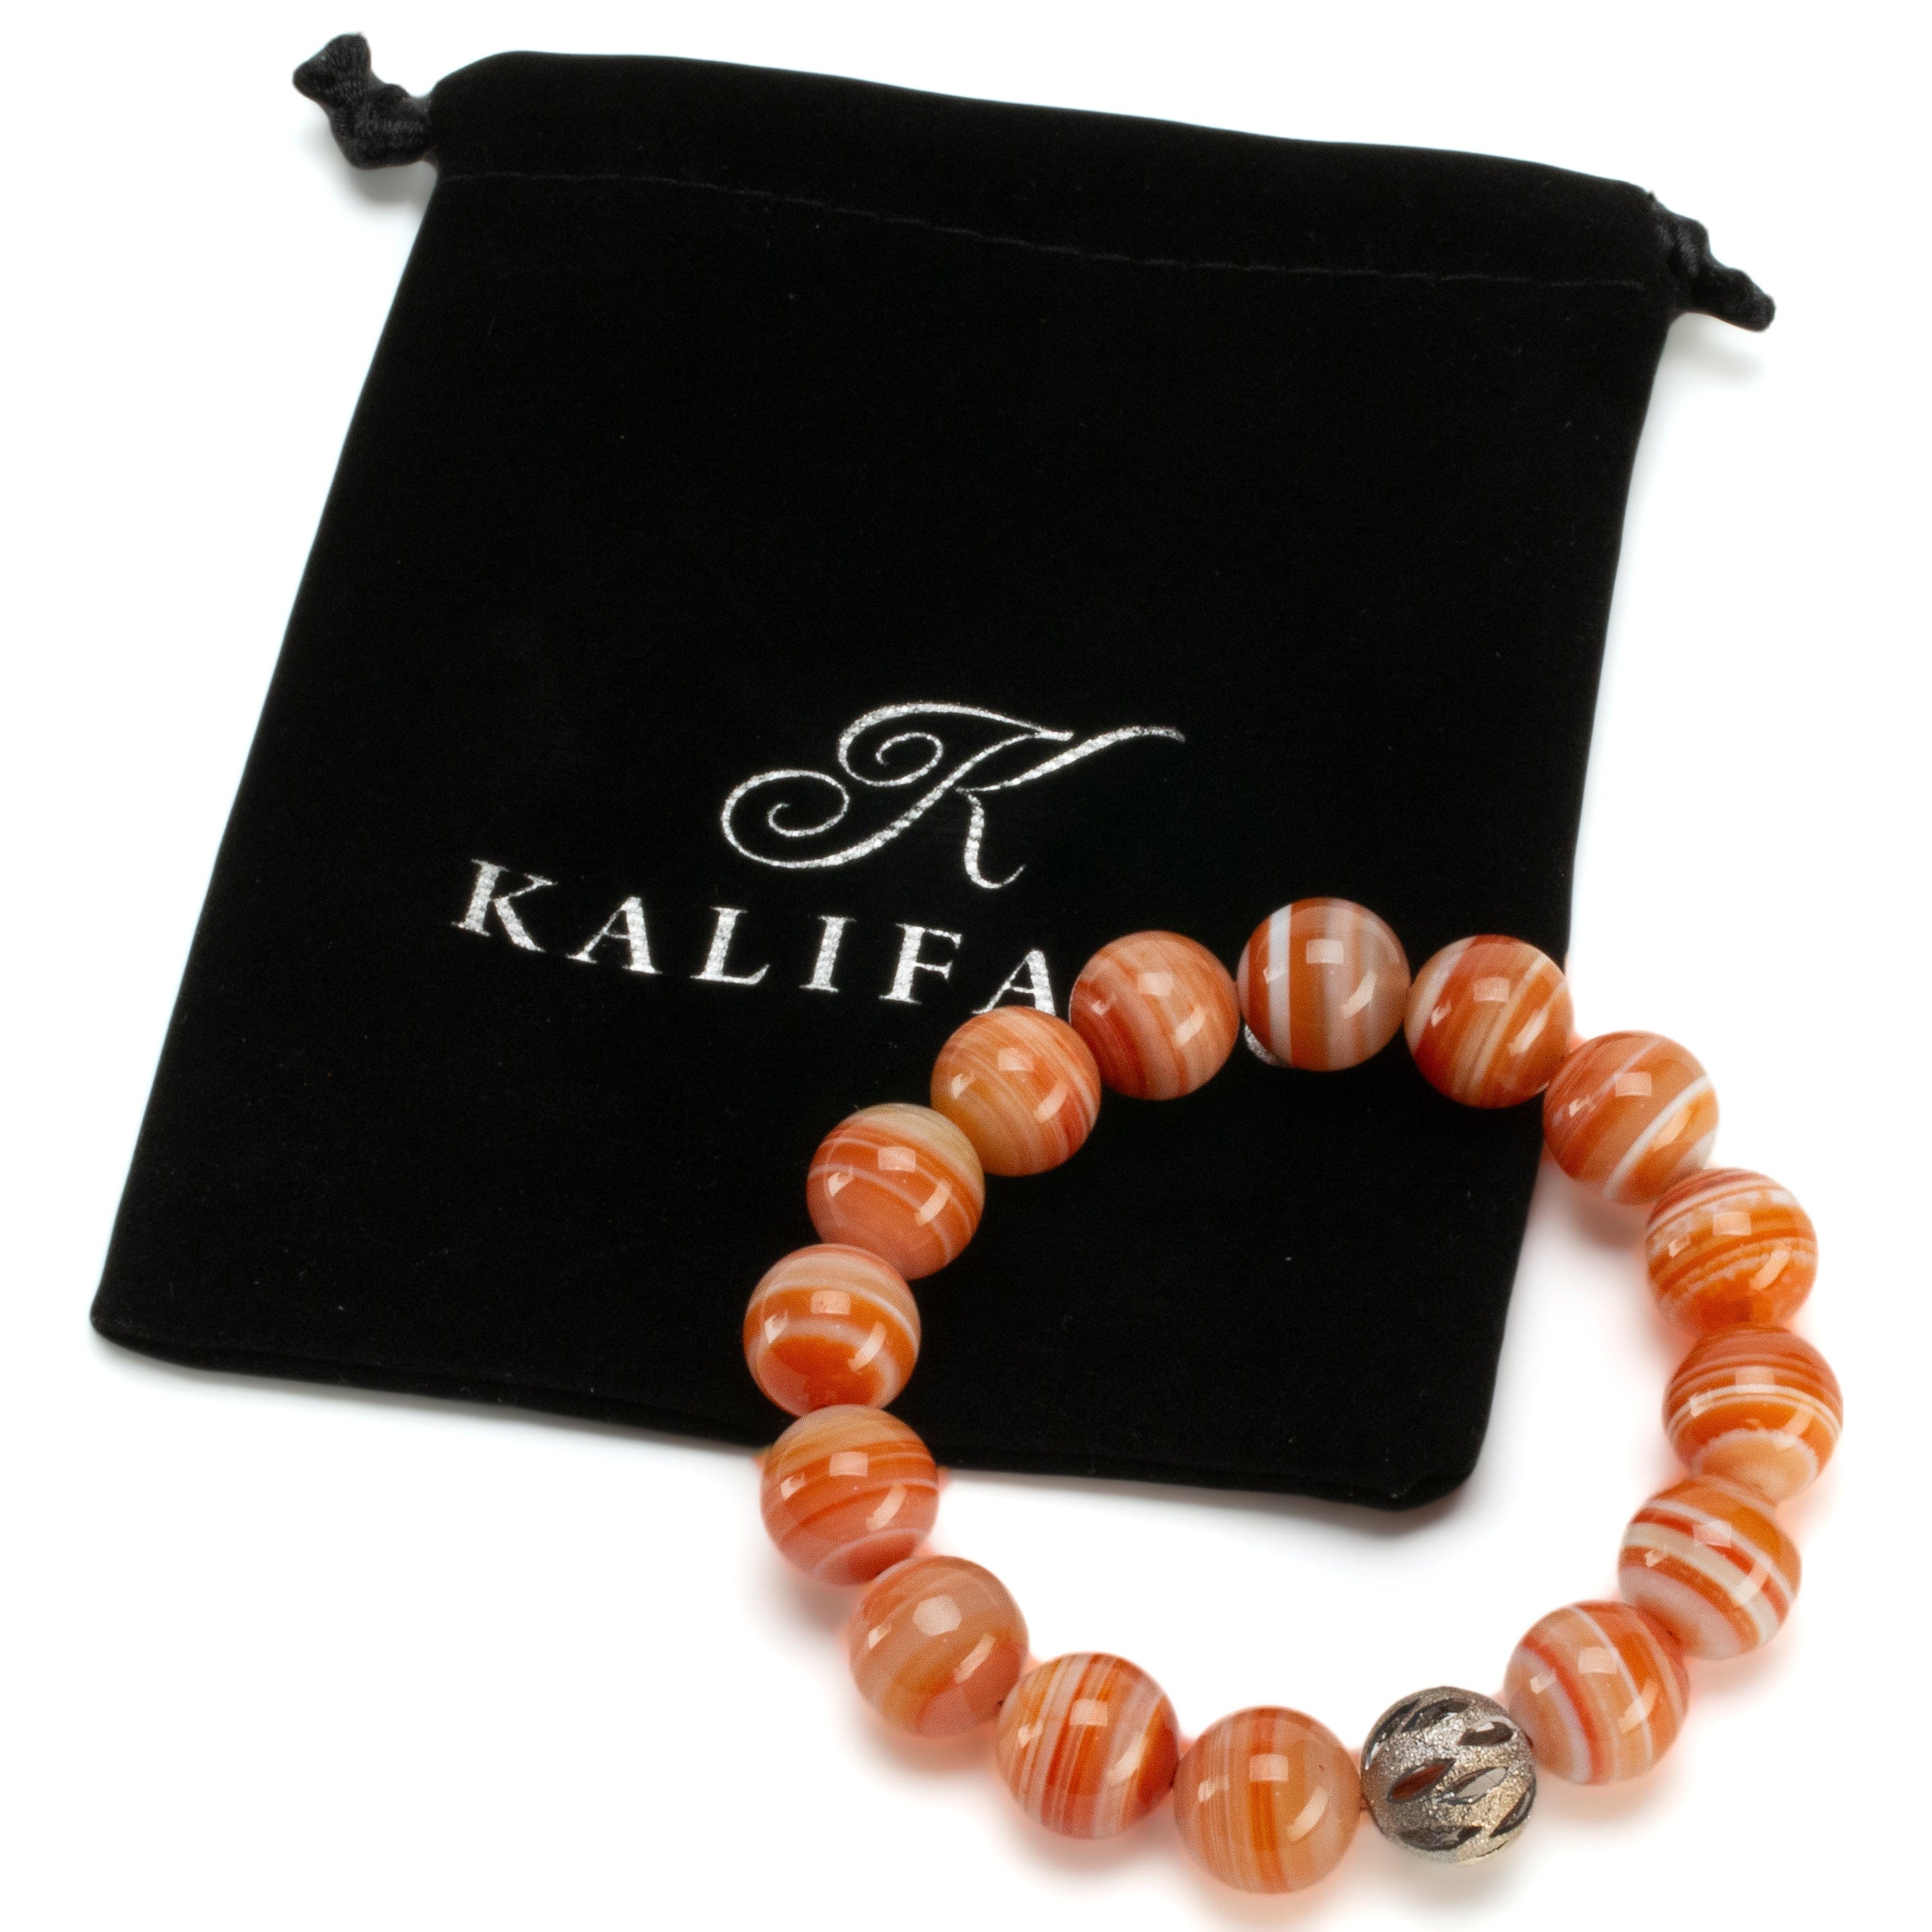 Kalifano Gemstone Bracelets Polished Banded Carnelian 12mm Gemstone Bead Elastic Bracelet with Silver Accent Bead GOLD-BGP-070